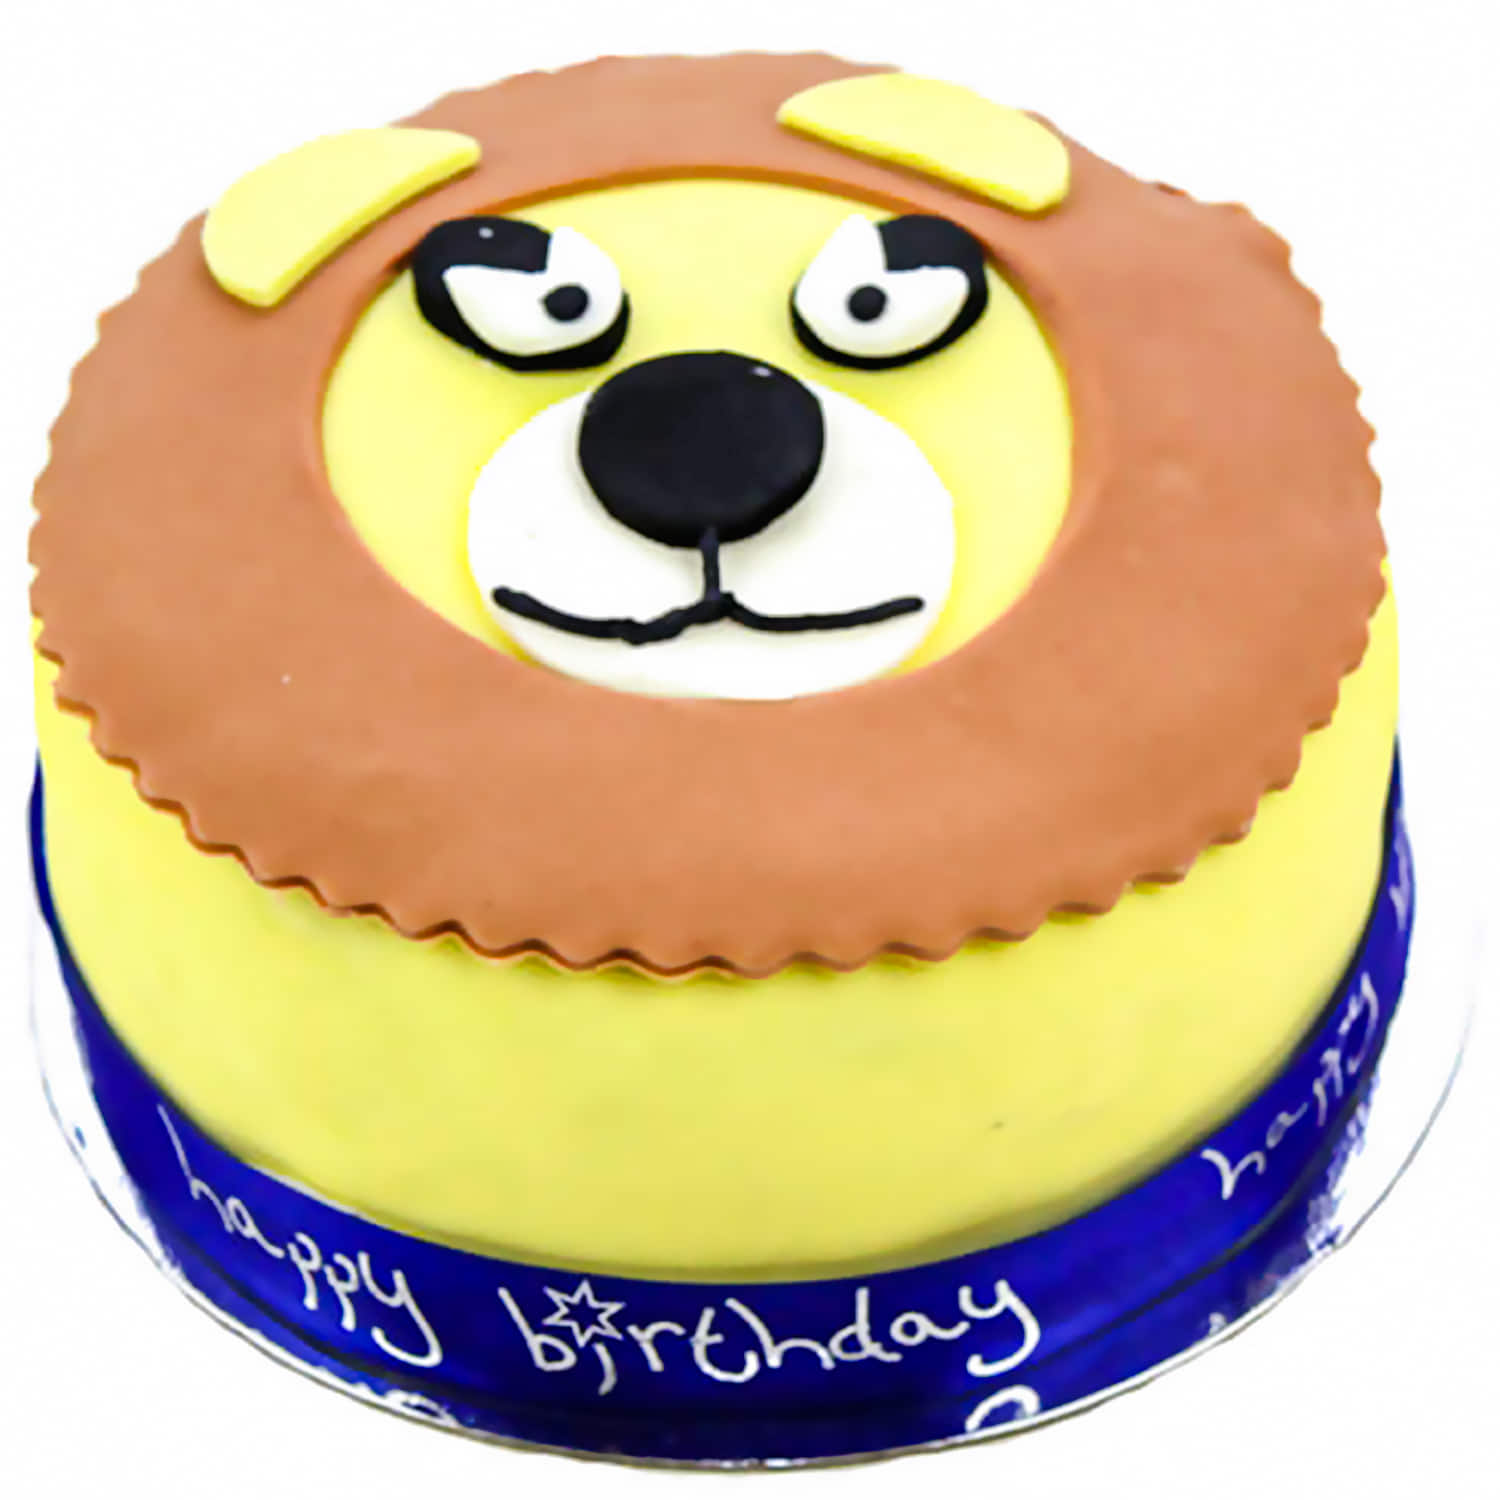 A Lion Birthday Cake - The Little Kitchen